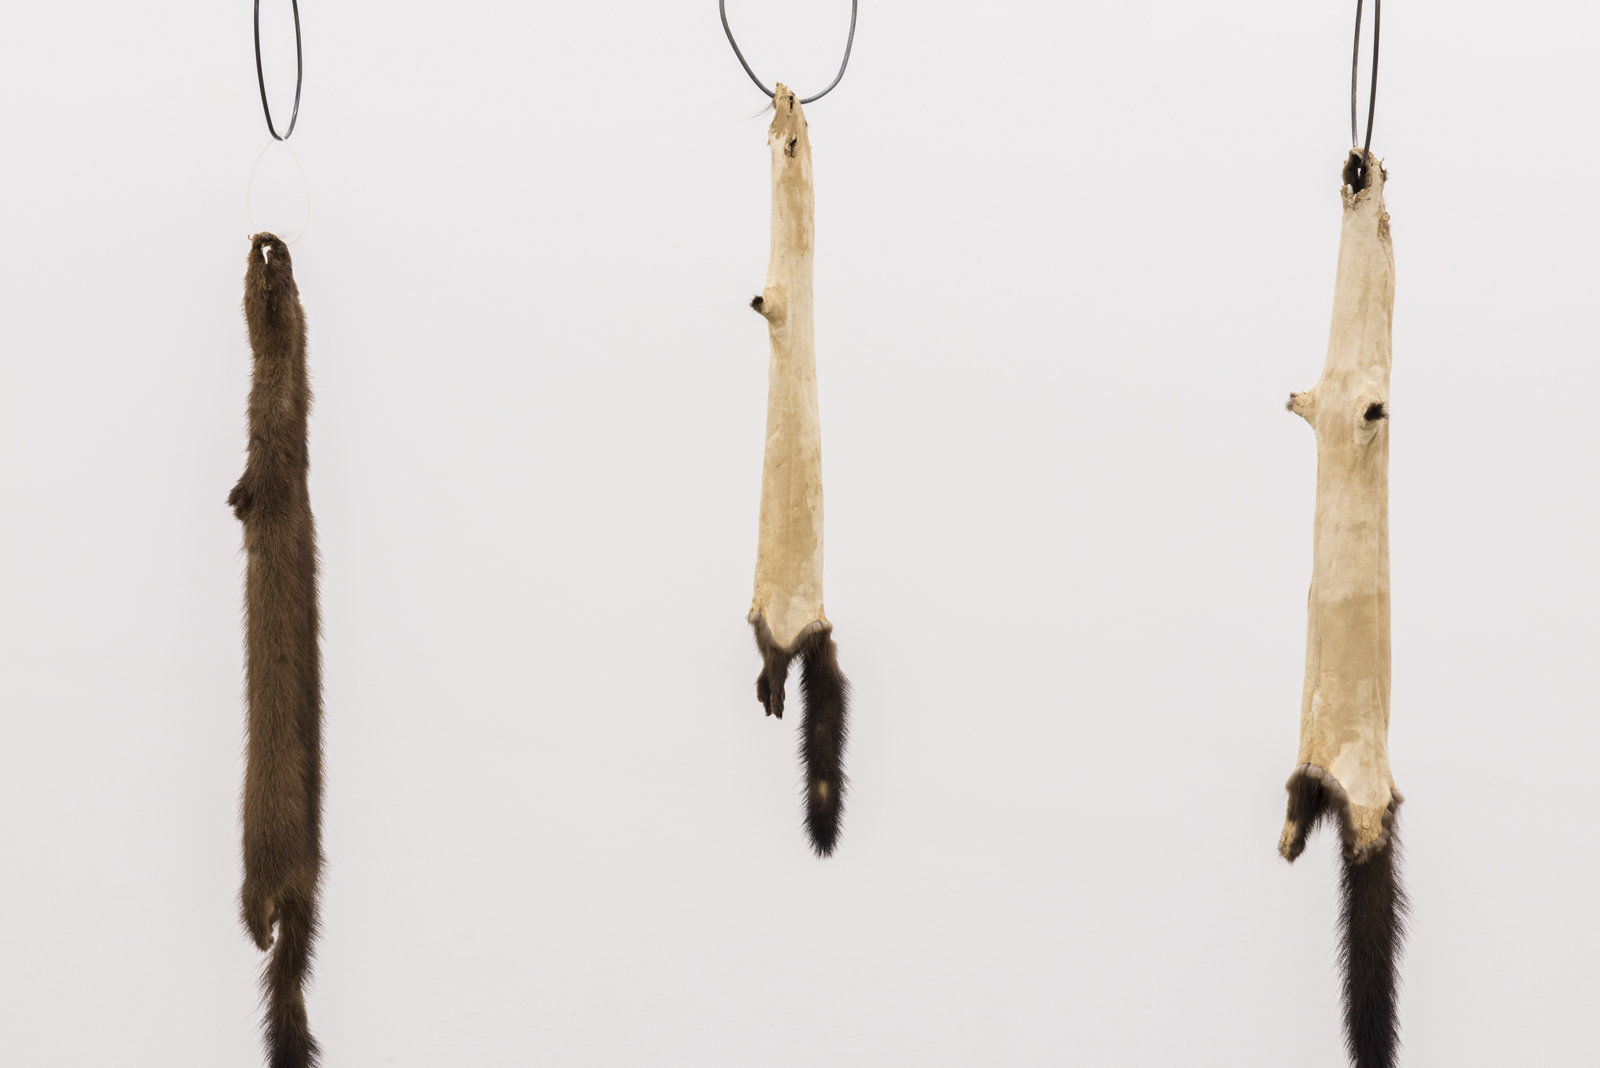 Duane Linklater, Little ghosts (detail), 2014, mink furs, garment rack, plastic cable tie, hangers, 66 x 60 x 20 in. (168 x 151 x 52 cm)